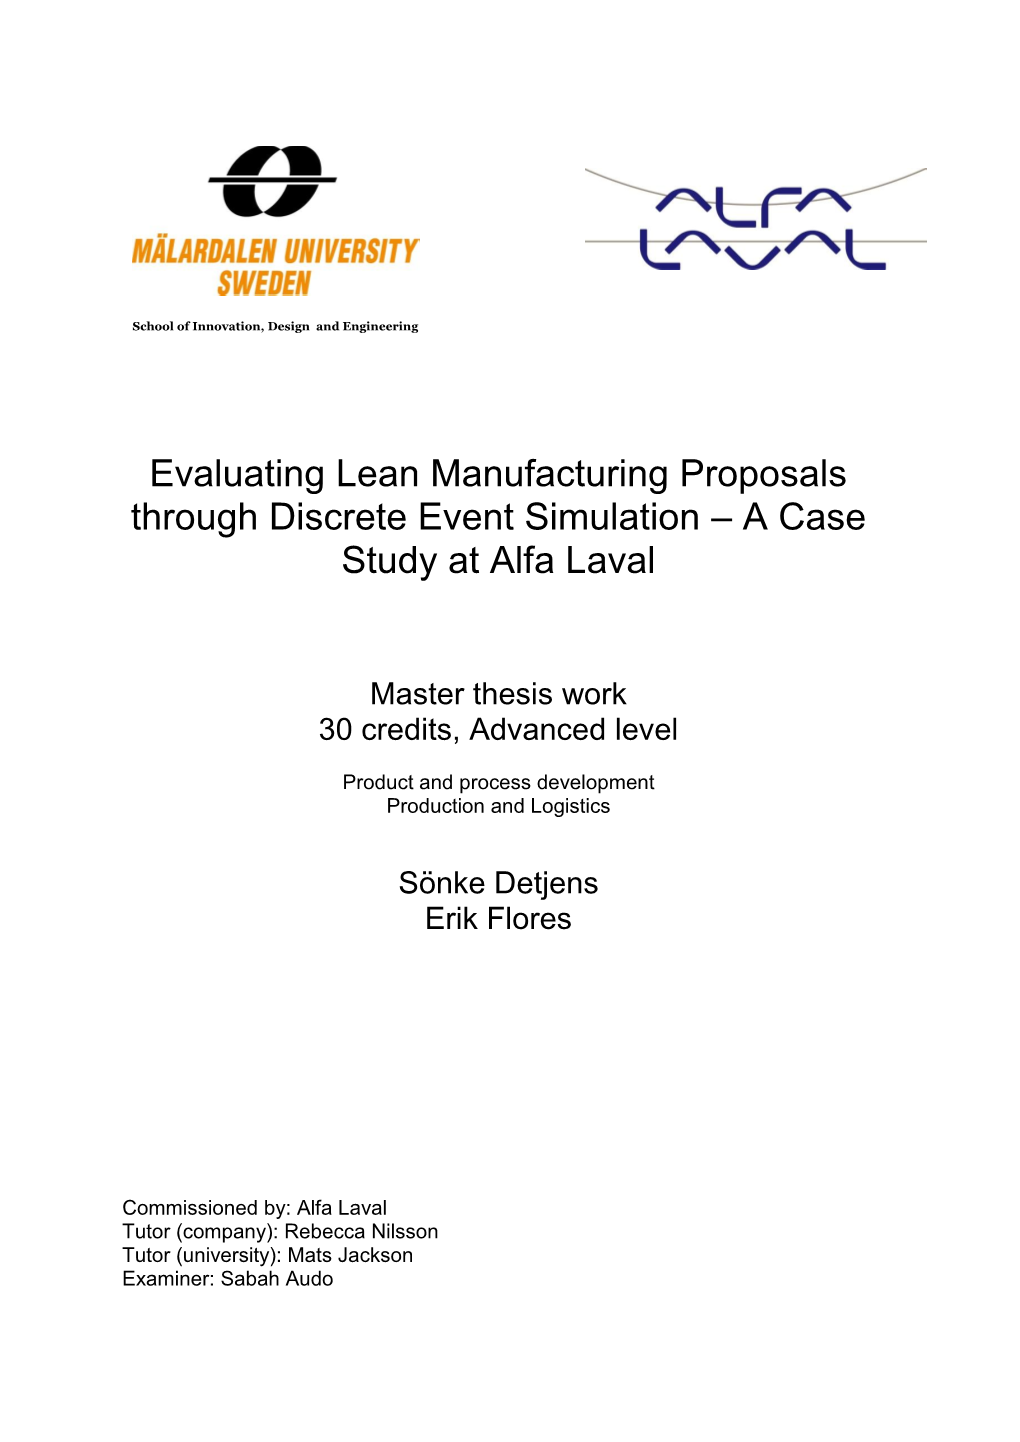 Evaluating Lean Manufacturing Proposals Through Discrete Event Simulation – a Case Study at Alfa Laval